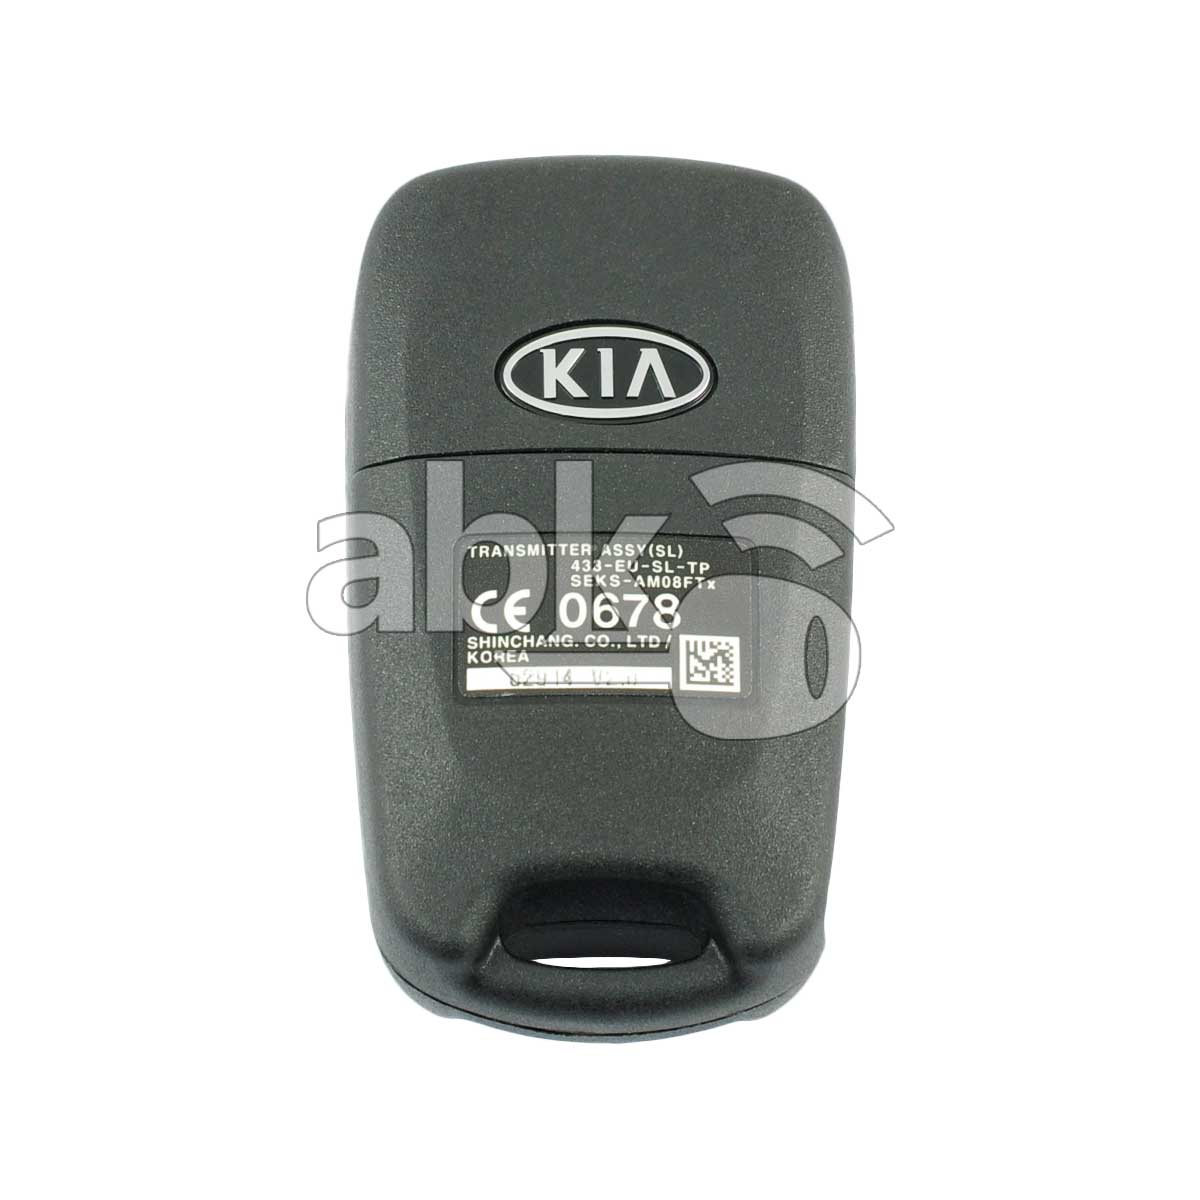 Genuine Kia Sportage 2010+ Flip Remote 3Buttons SEKS-AM08FTX 433MHz 95430-3U000 - ABK-3062 - 